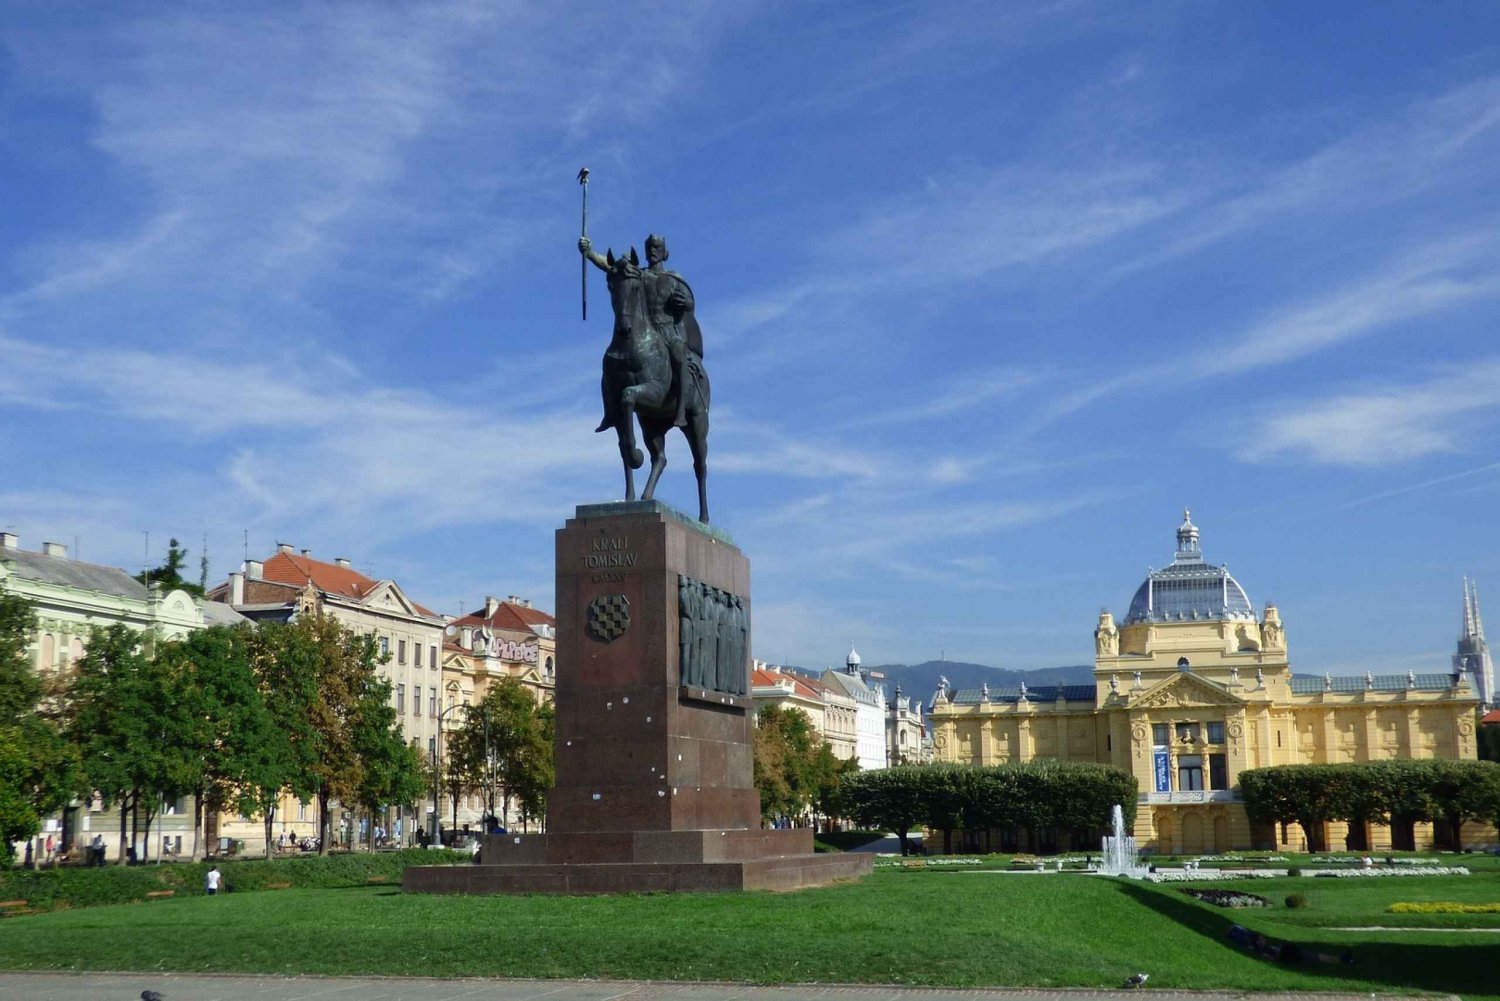 Croatia Day Trip From Vienna Including the Capital Zagreb